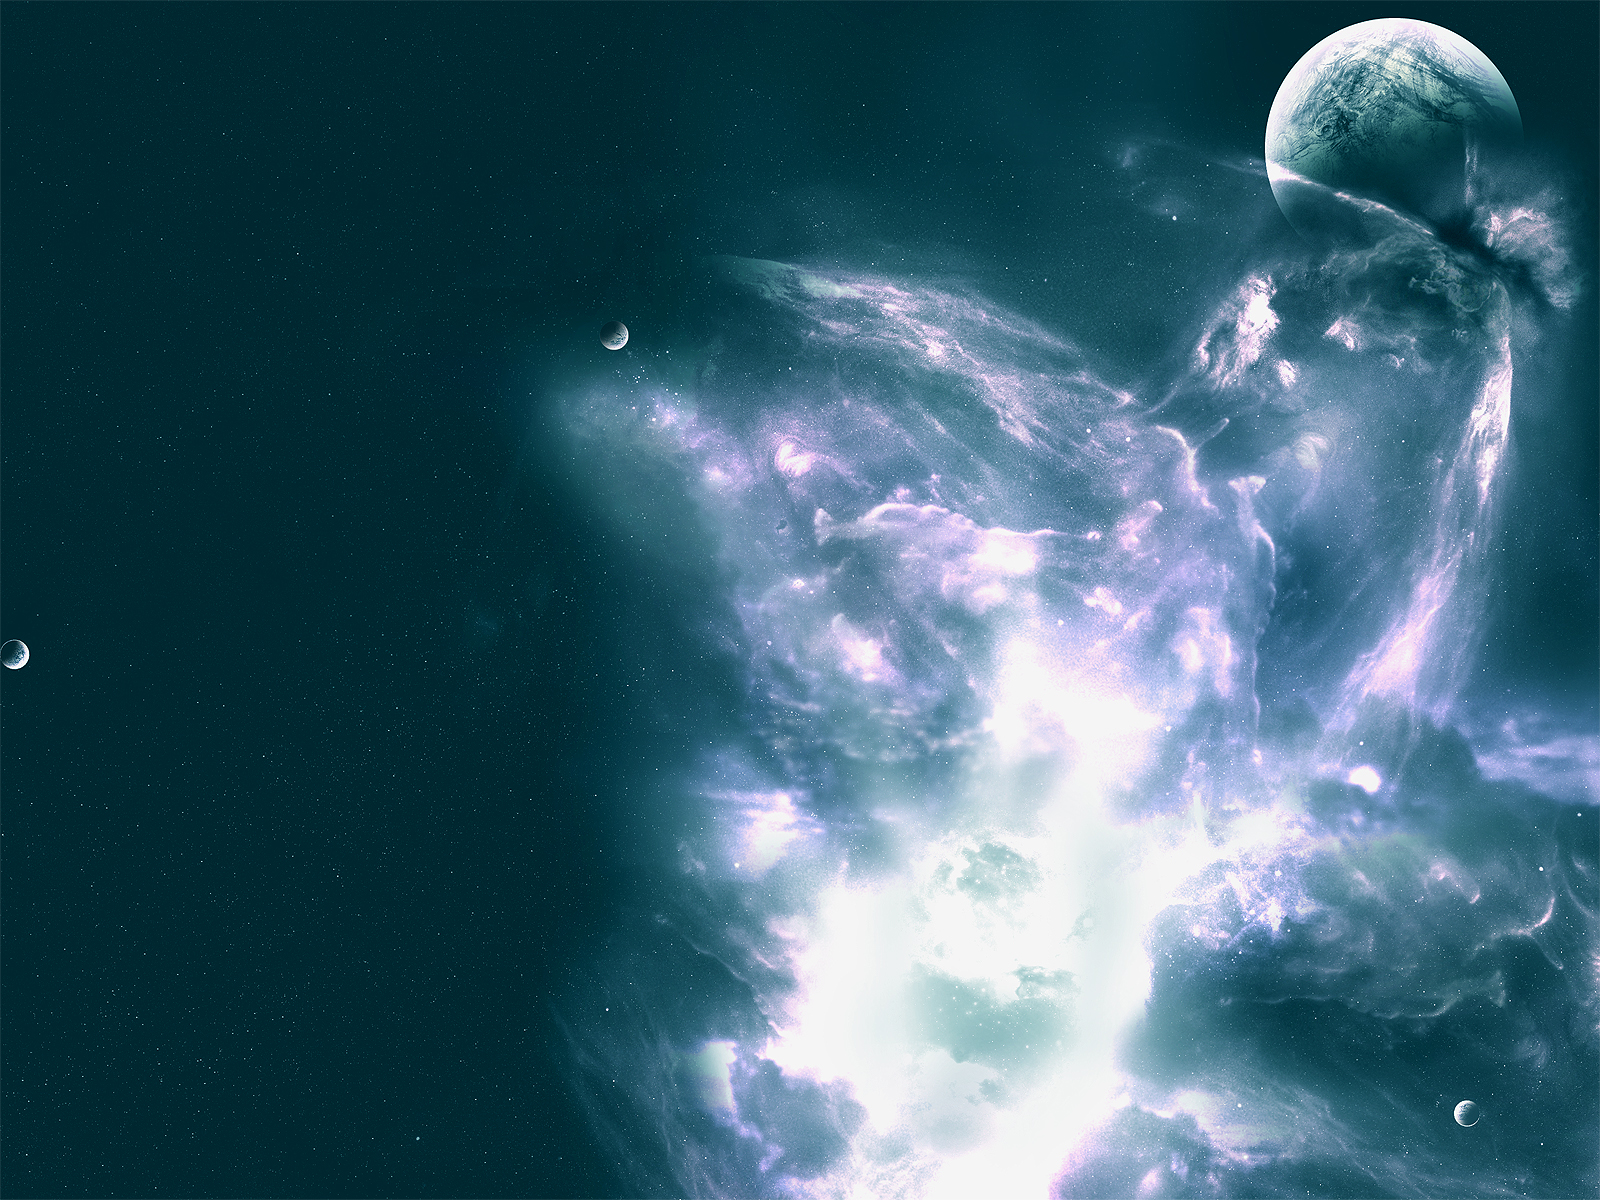 sci fi wallpaper,himmel,atmosphäre,weltraum,astronomisches objekt,wasser